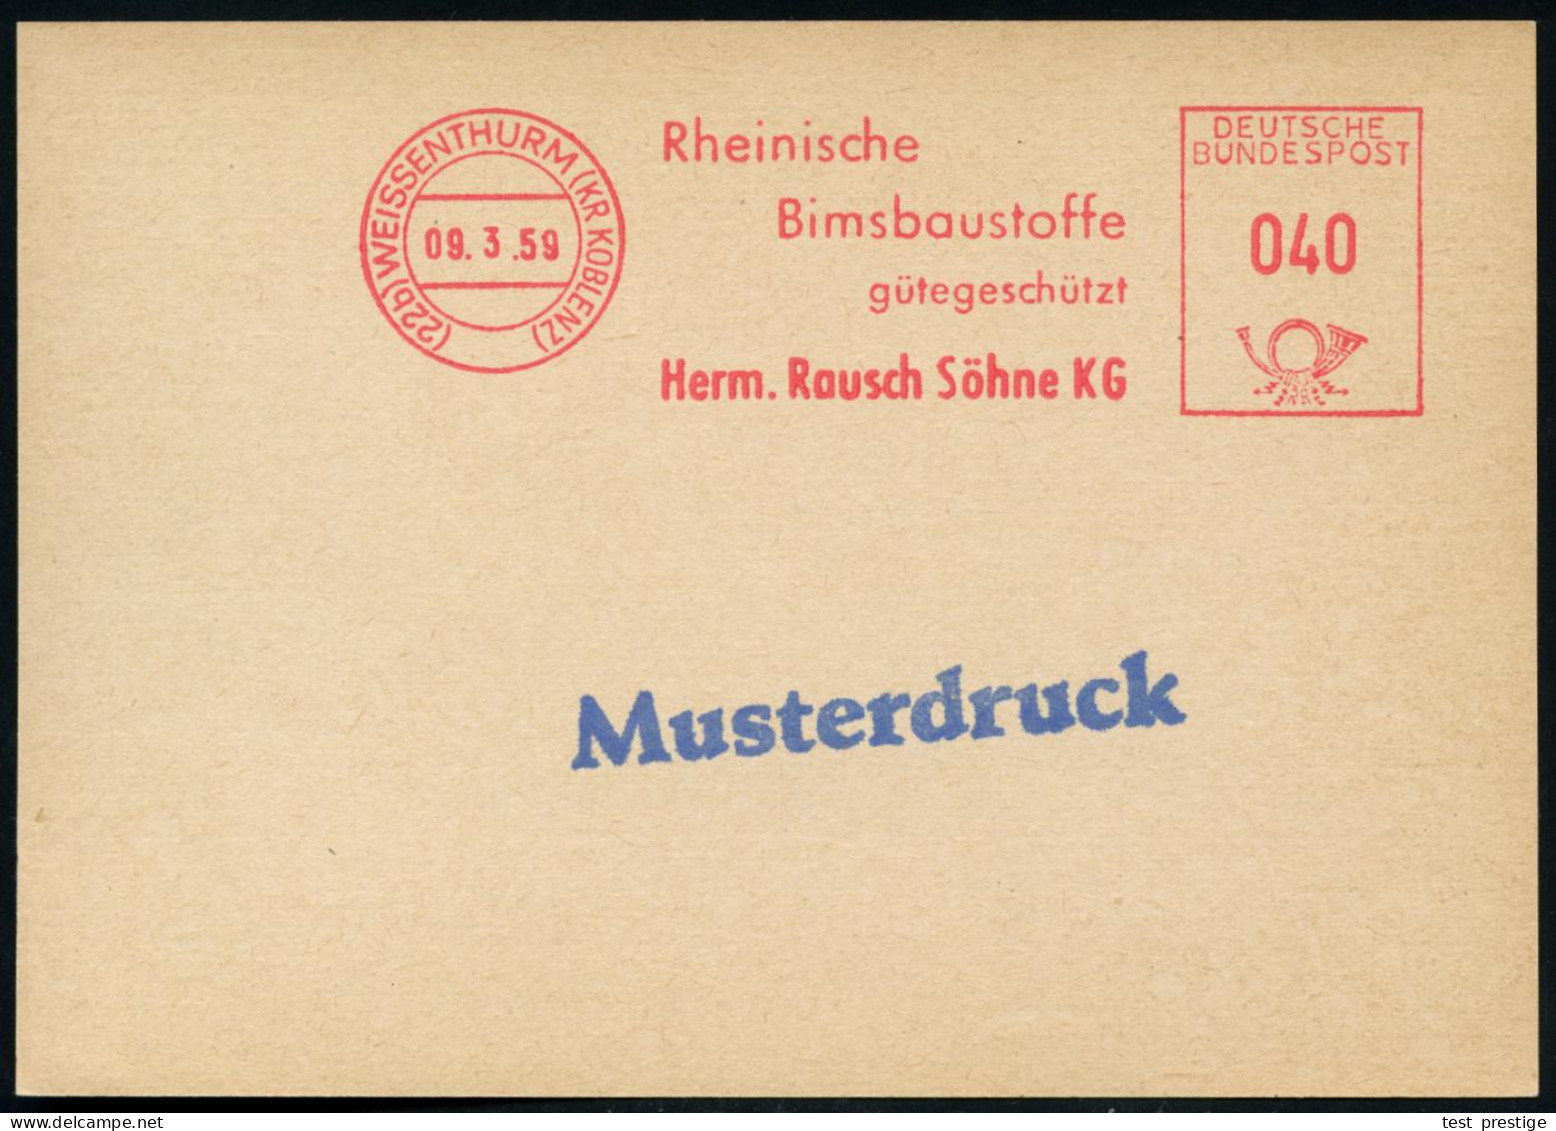 (22b) WEISSENTHURM (KR KOBLENZ)/ Rhein./ Bimsbaustoffe/ Gütegeschütz/ Herm.Rausch Söhne KG 1959 (9.3.) AFS 040 Pf. Franc - Chemie